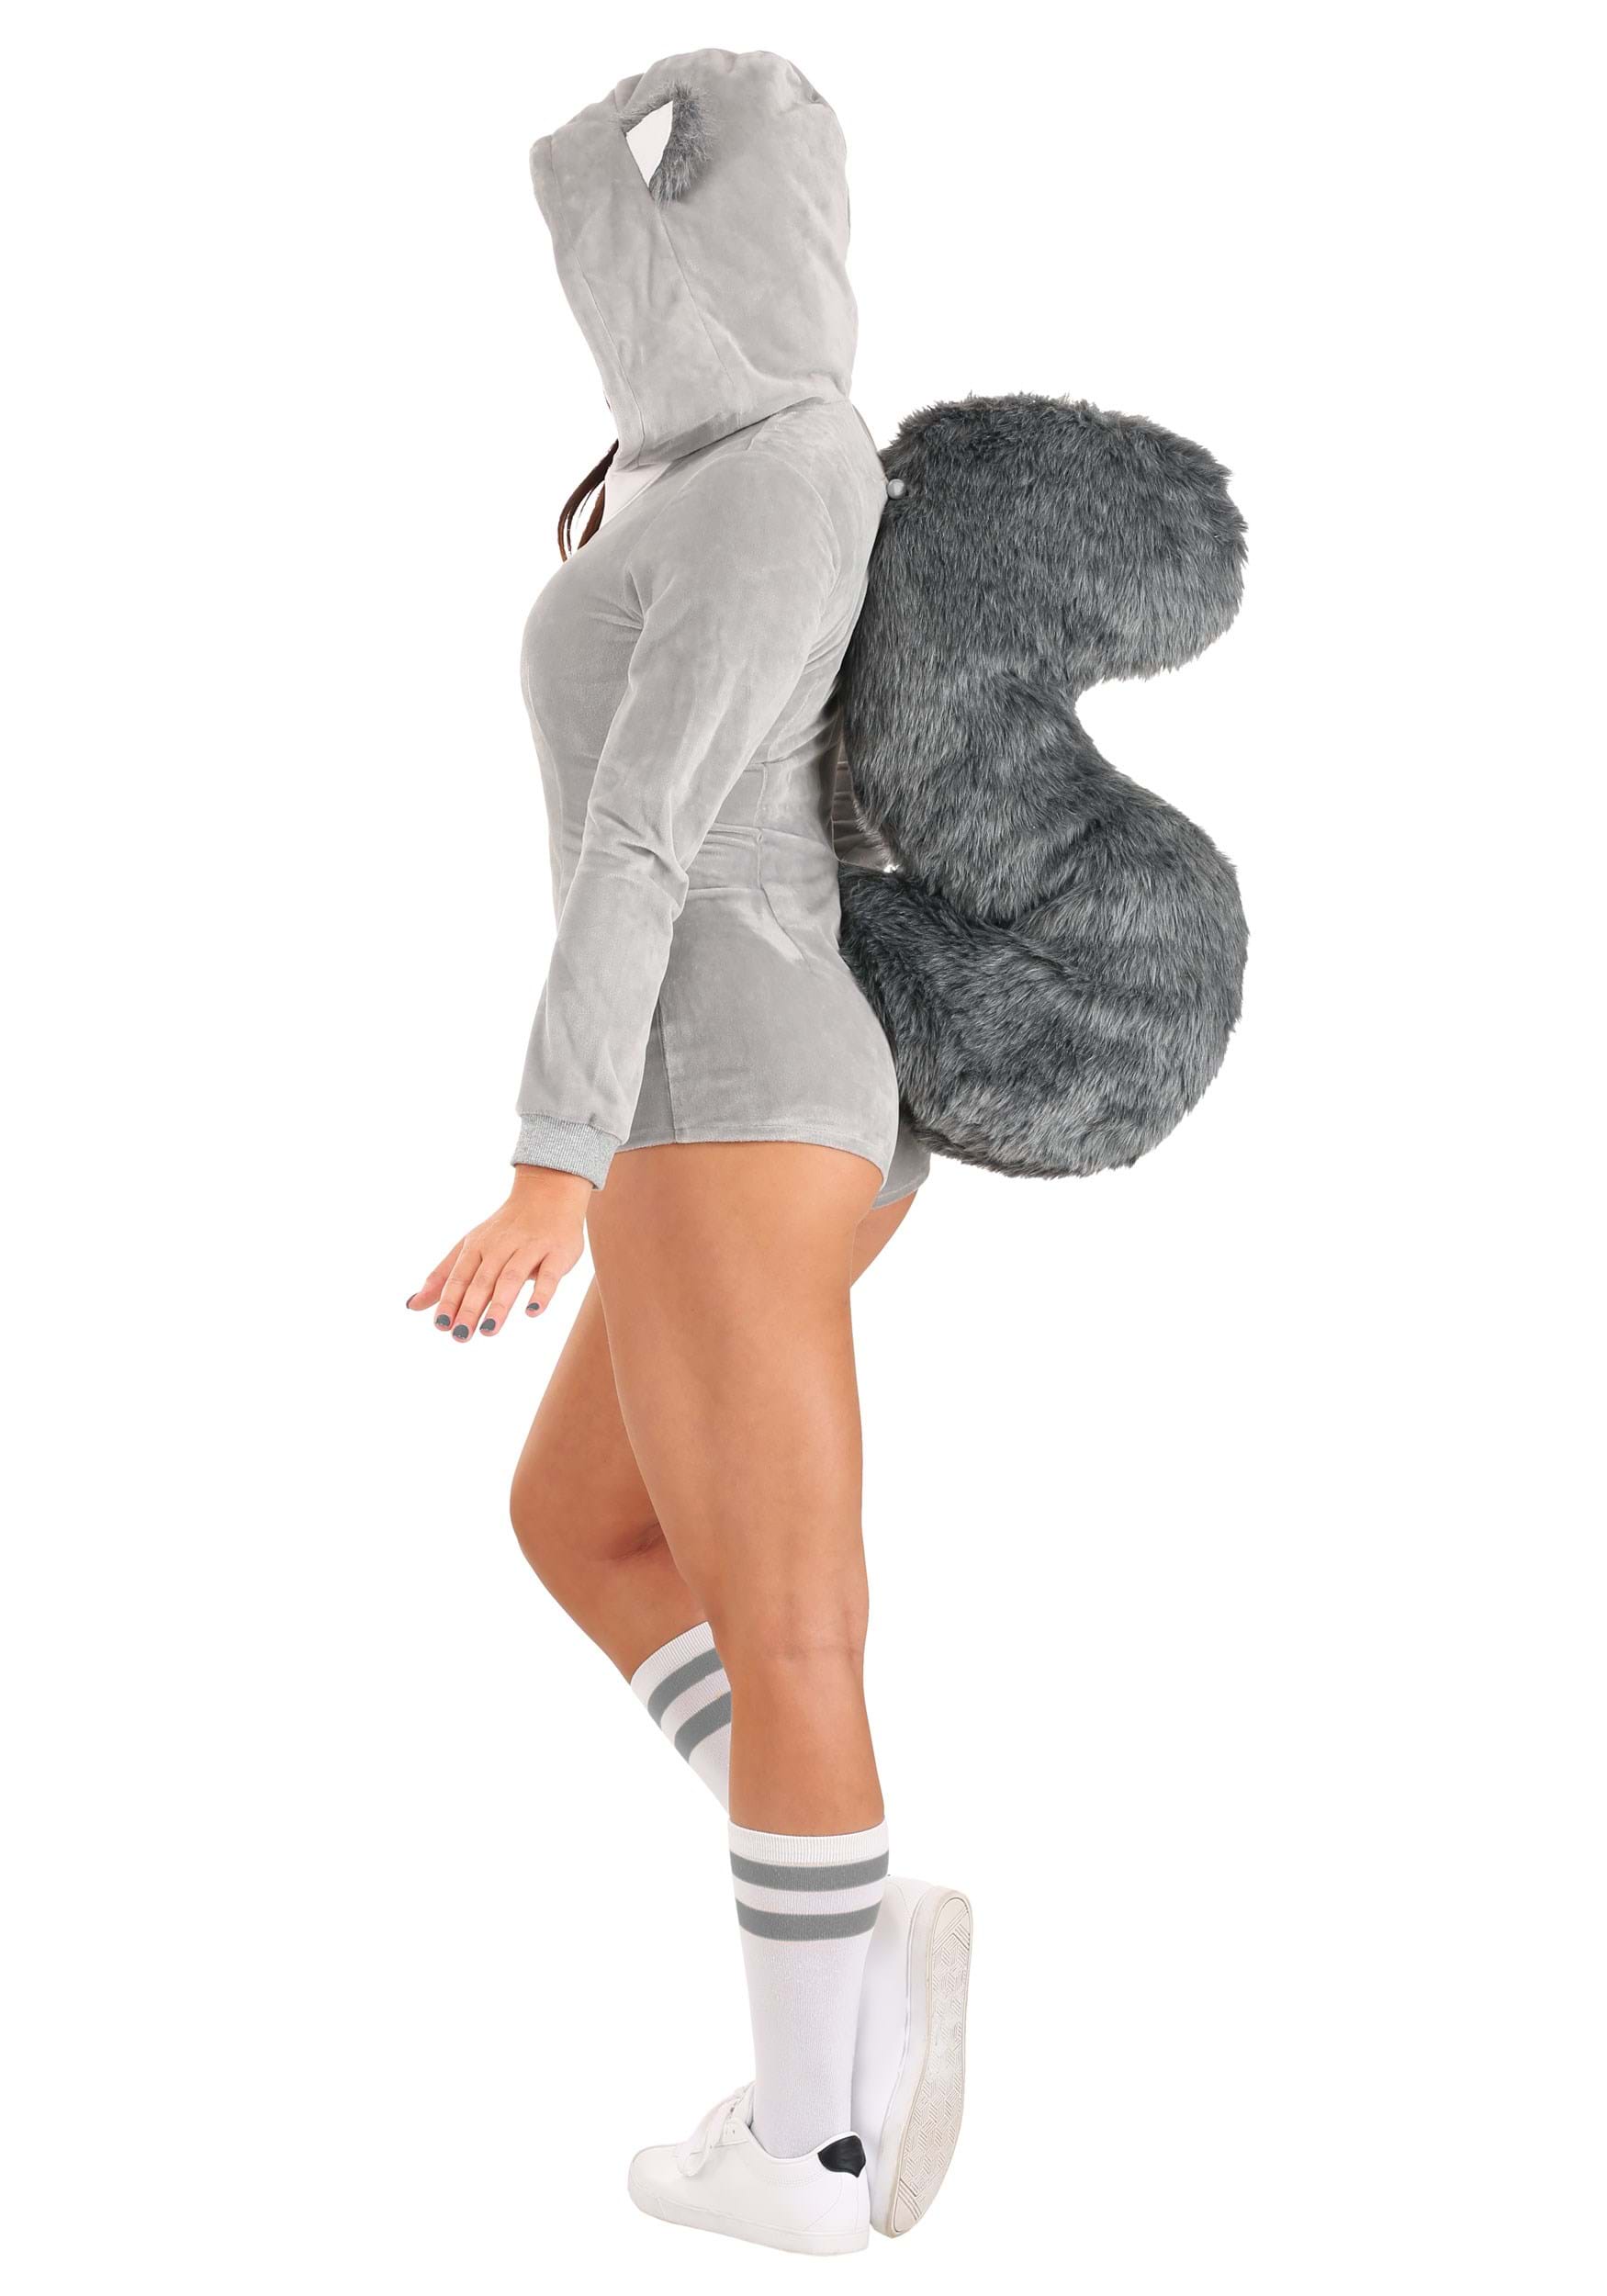 Sassy Grey Squirrel Costume For Women